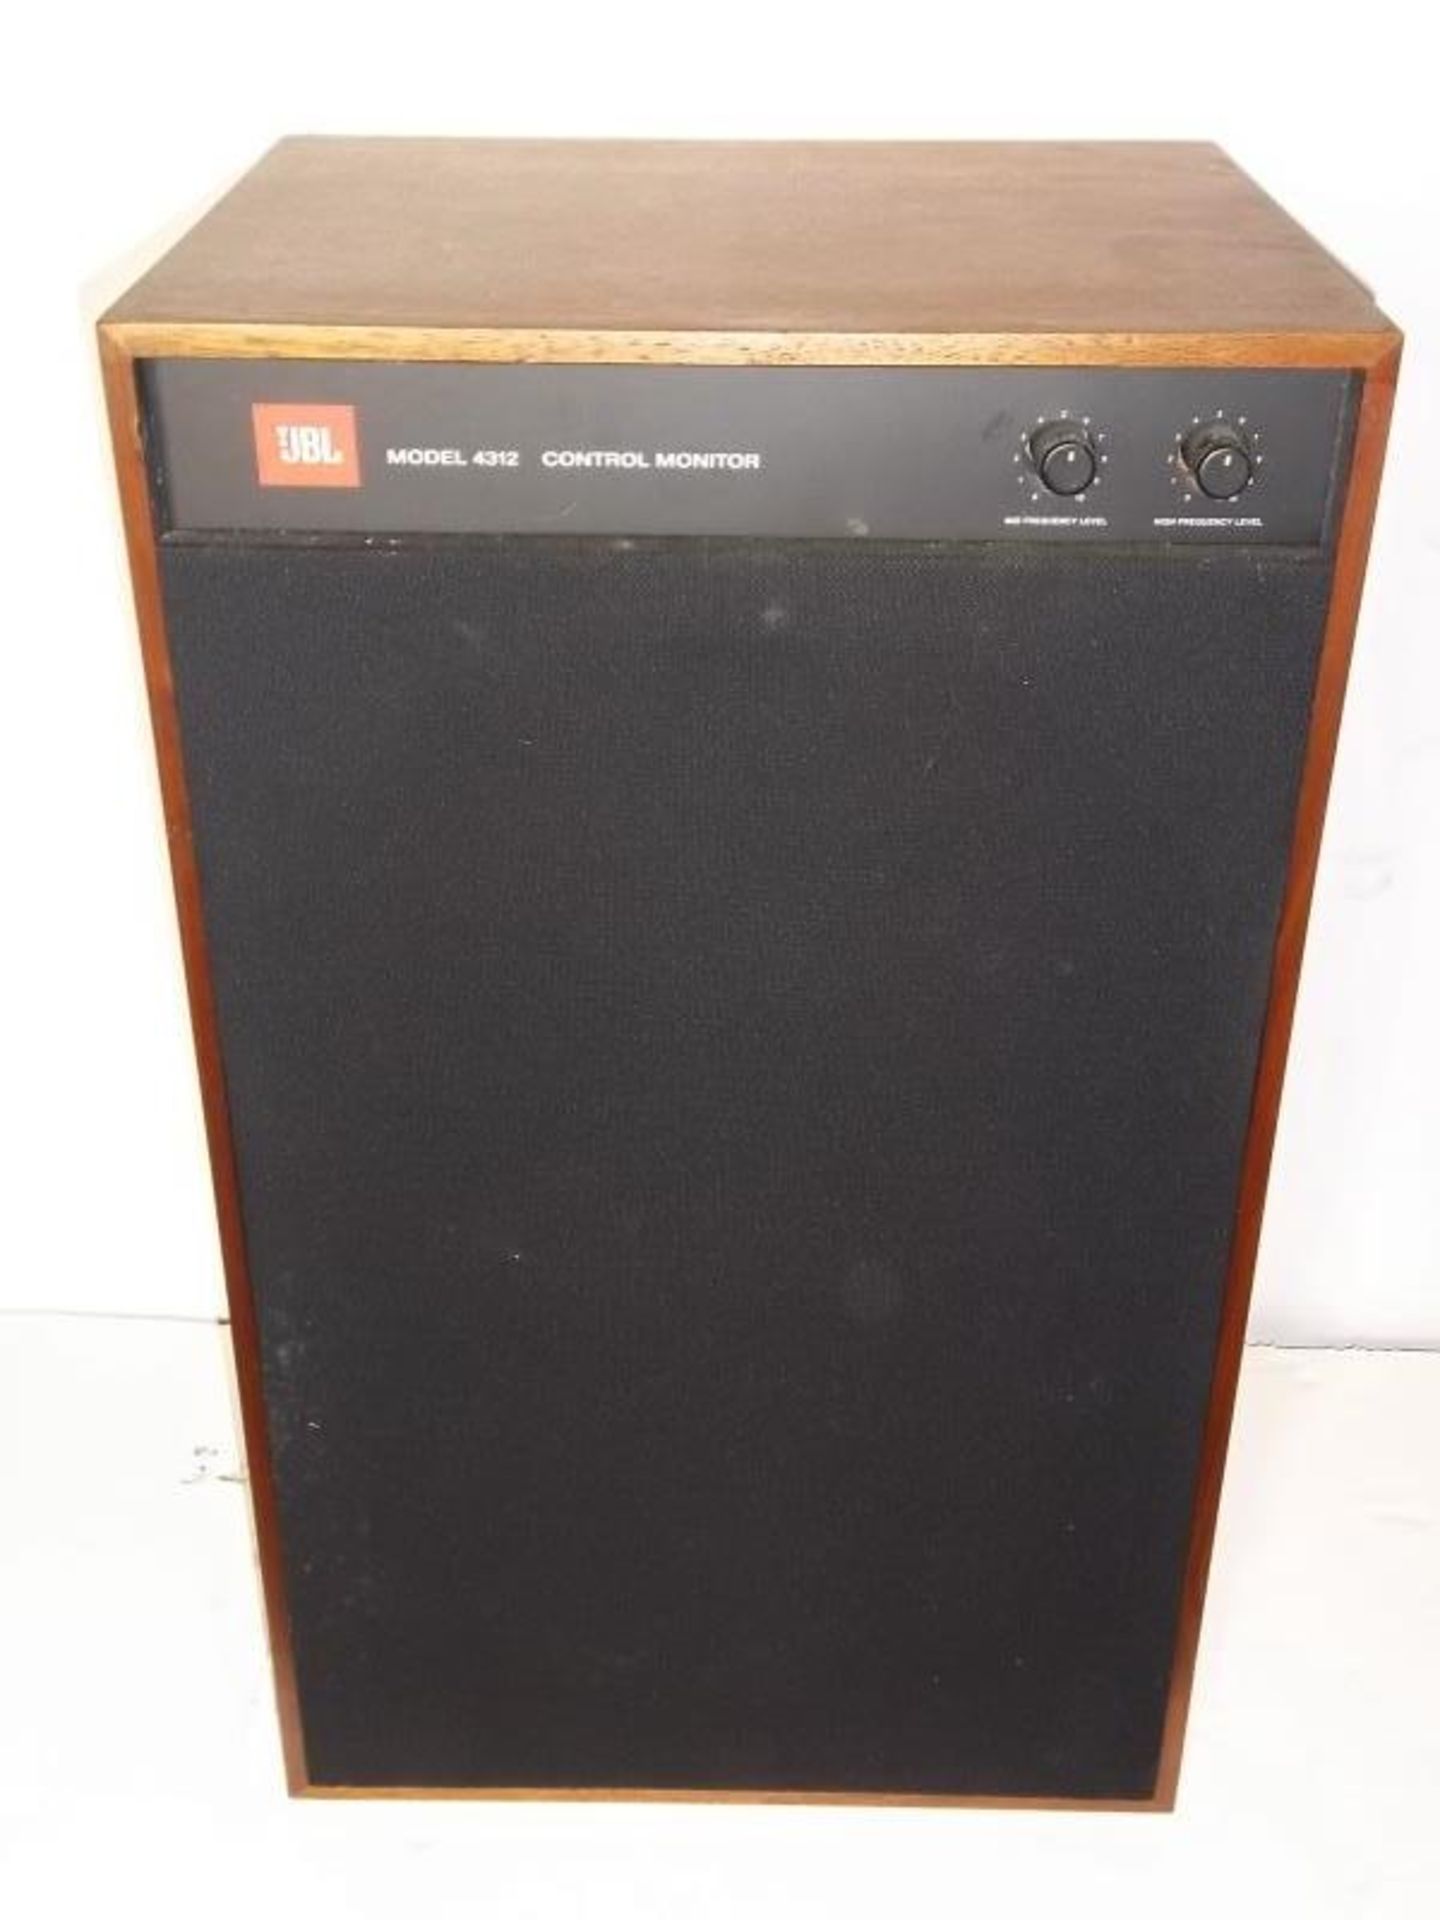 Pr JBL model 4312 speaker cabinets with speakers, 14" x 11.5 x 23.5" h - Image 5 of 6